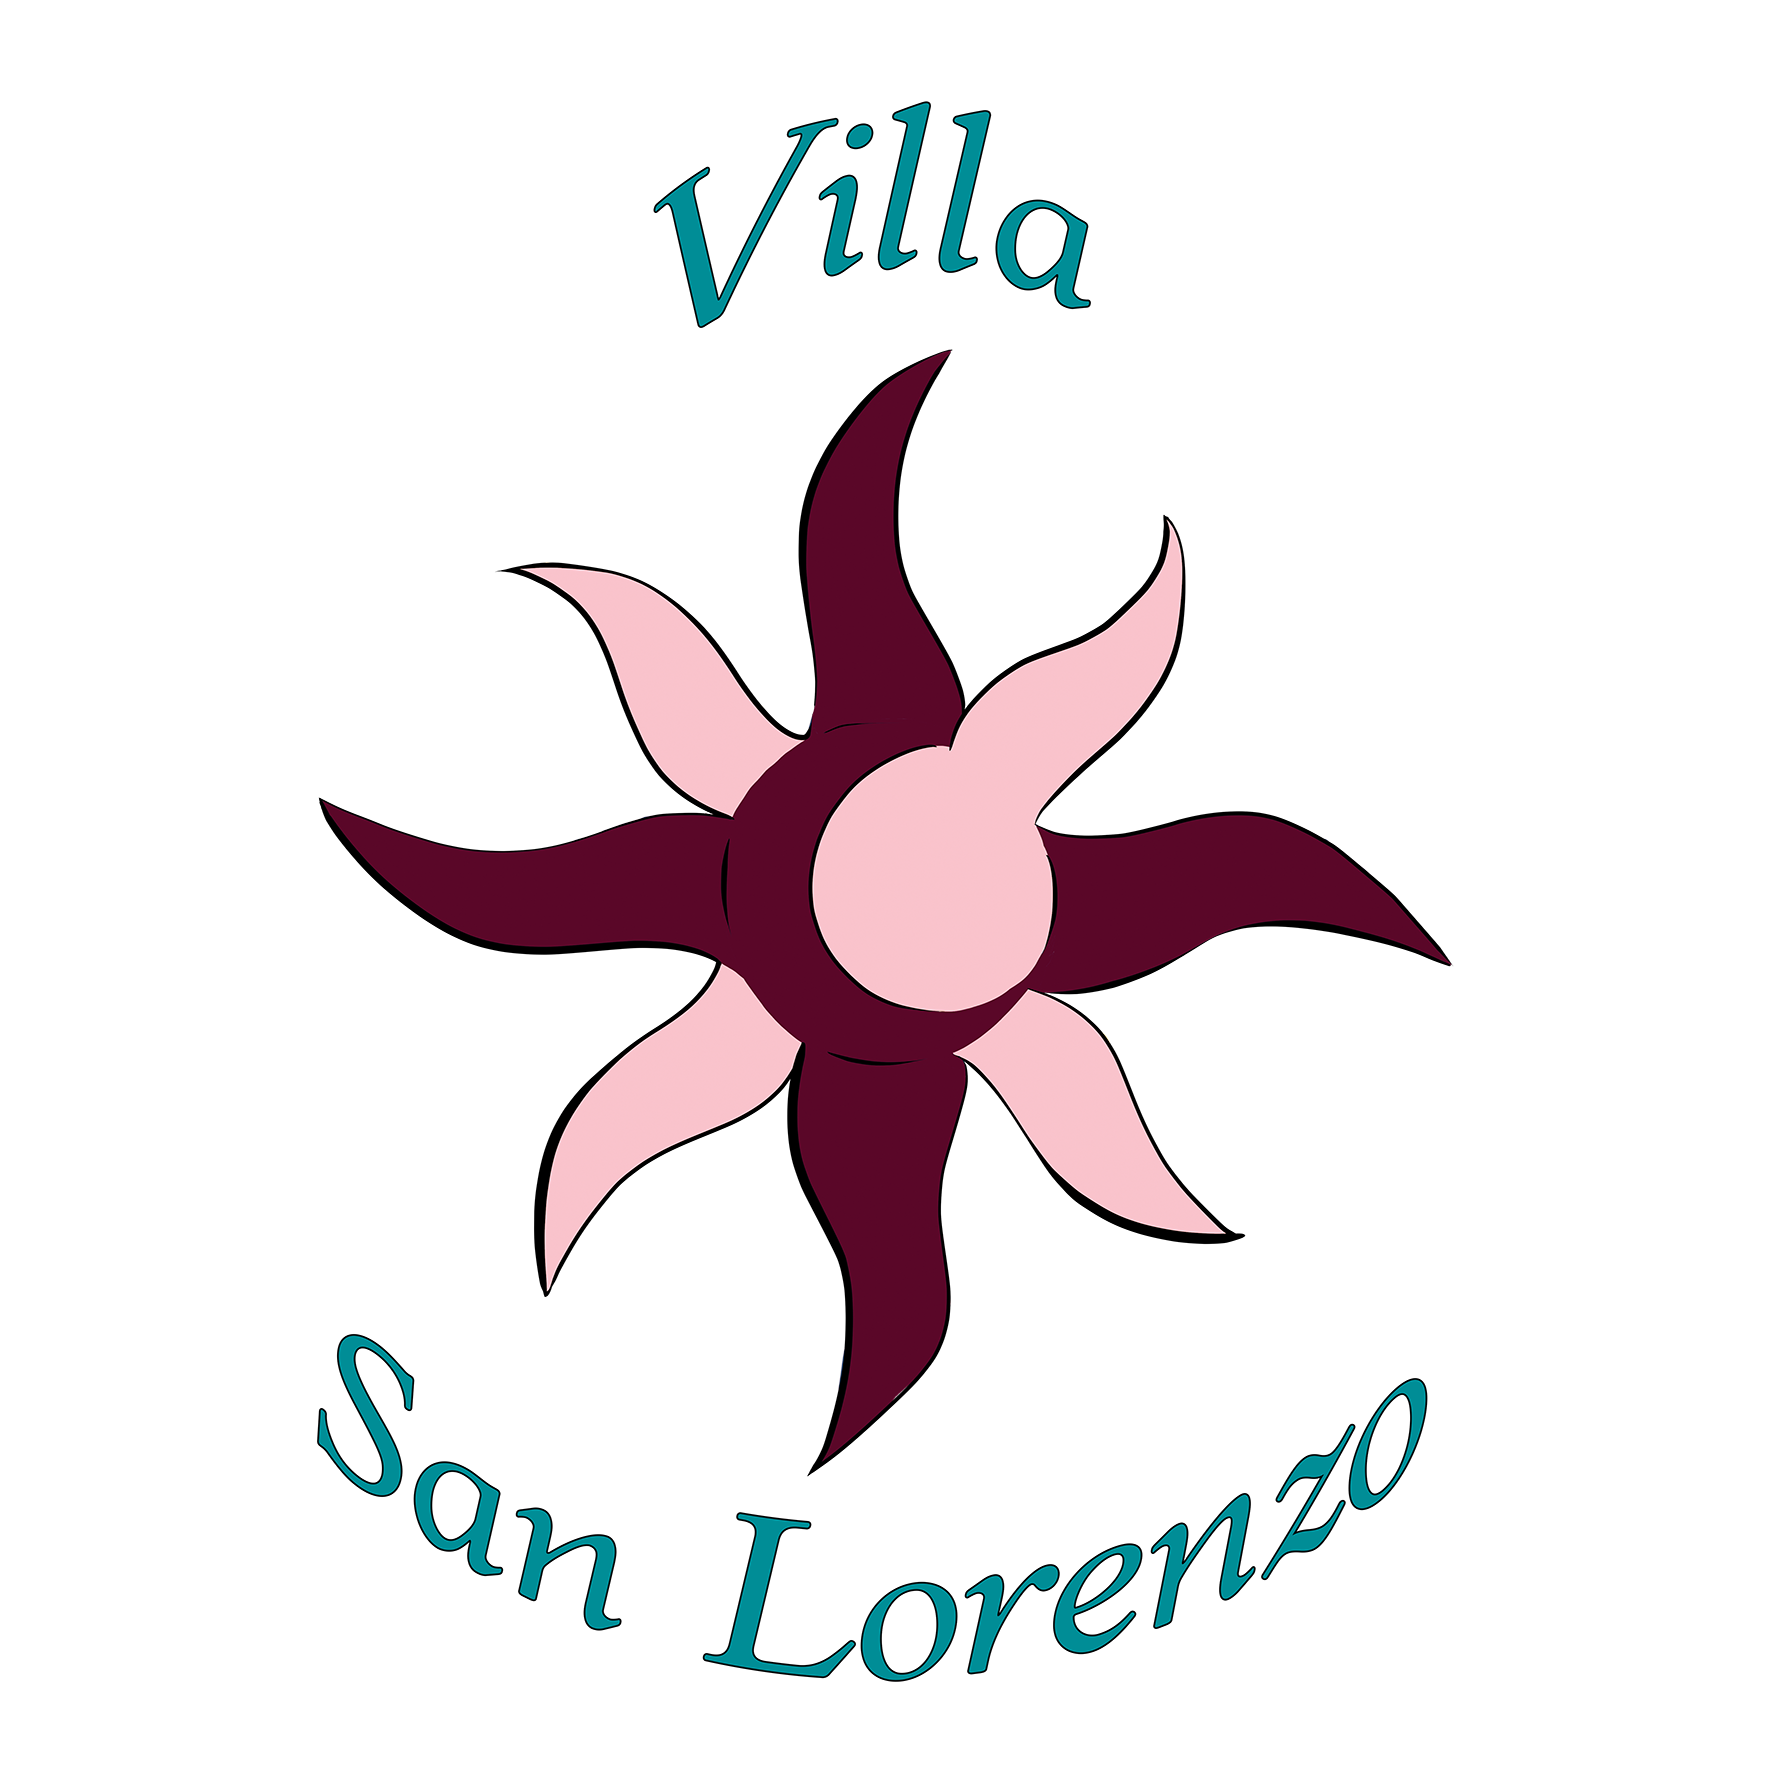 Villa San Lorenzo